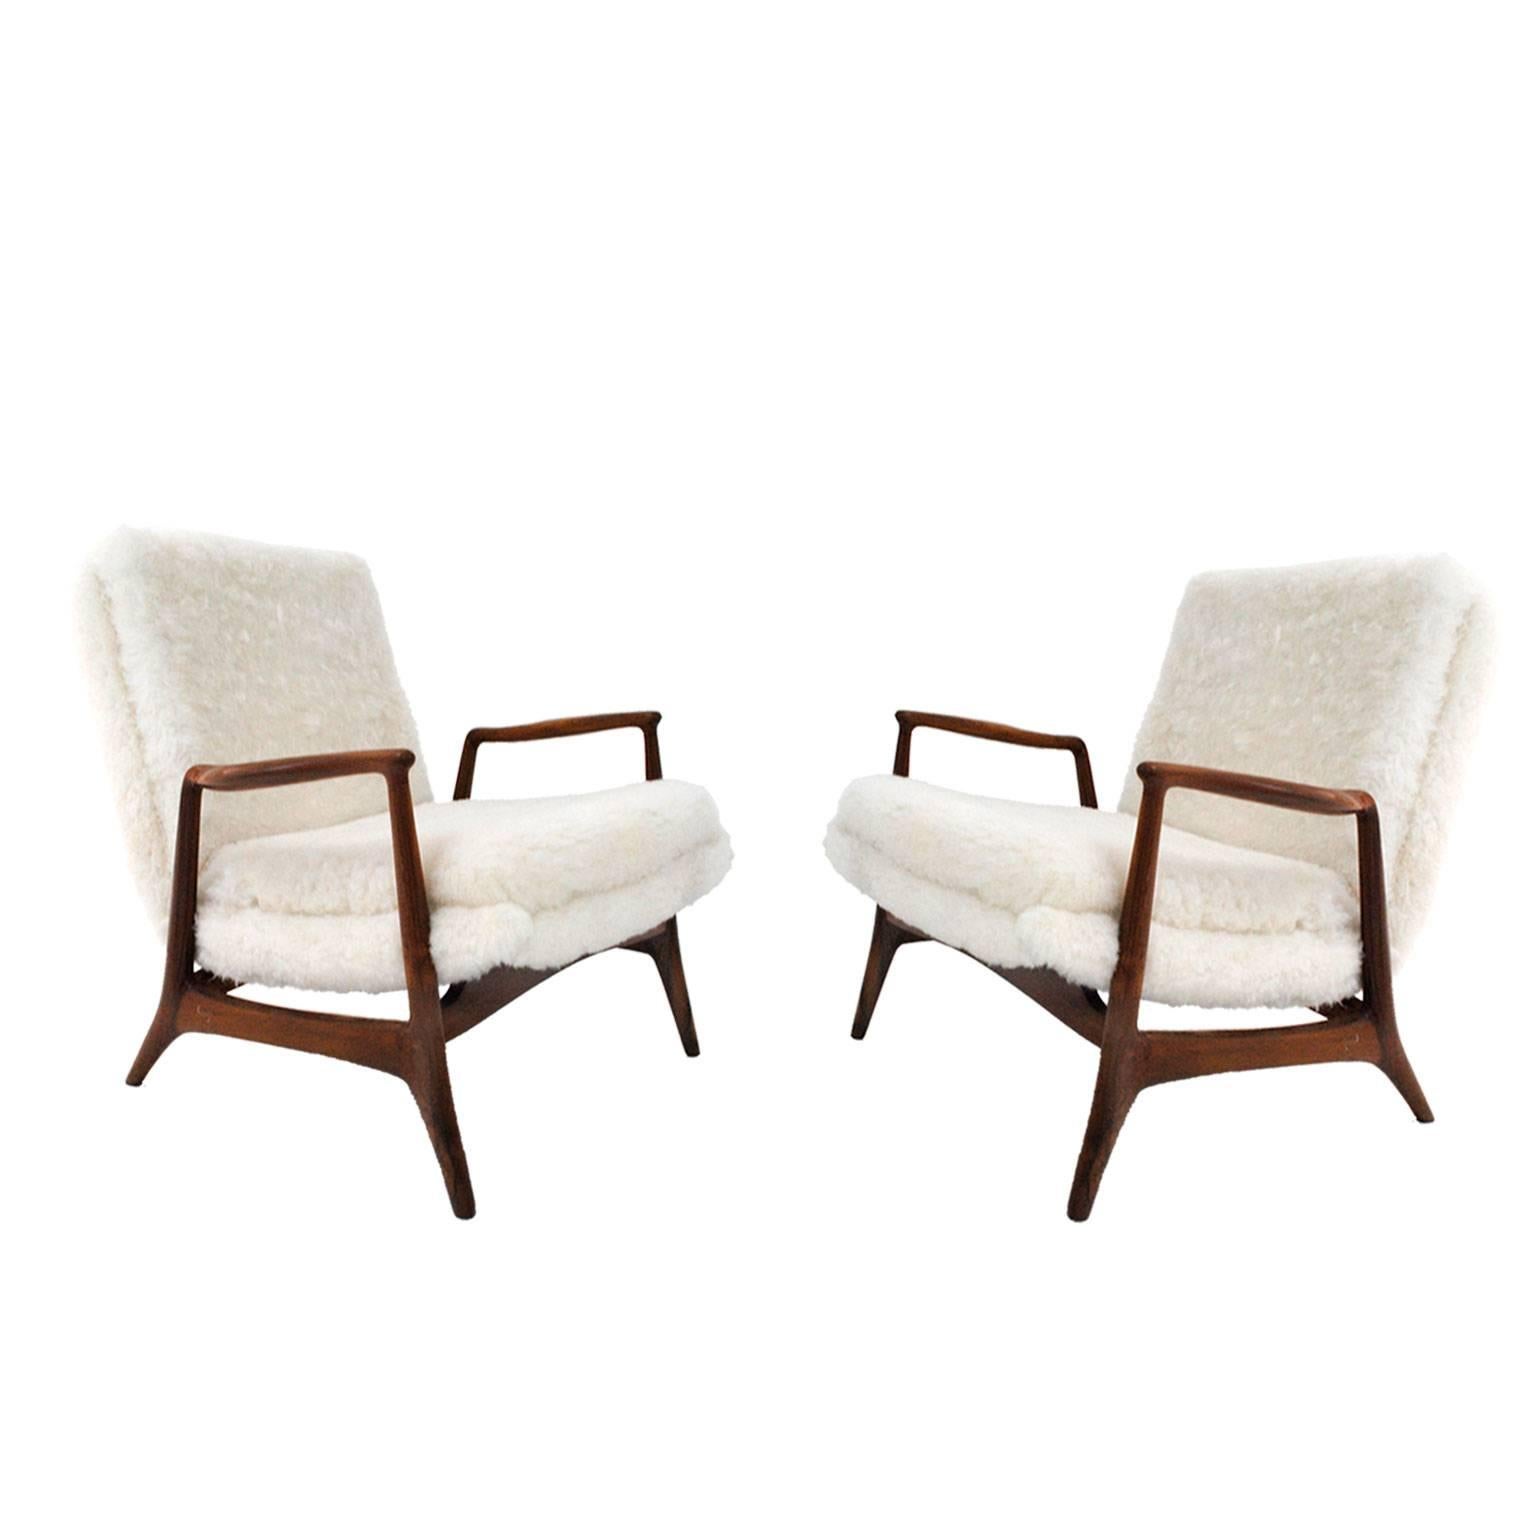 Pair of Armchairs Designed by Vladimir Kagan